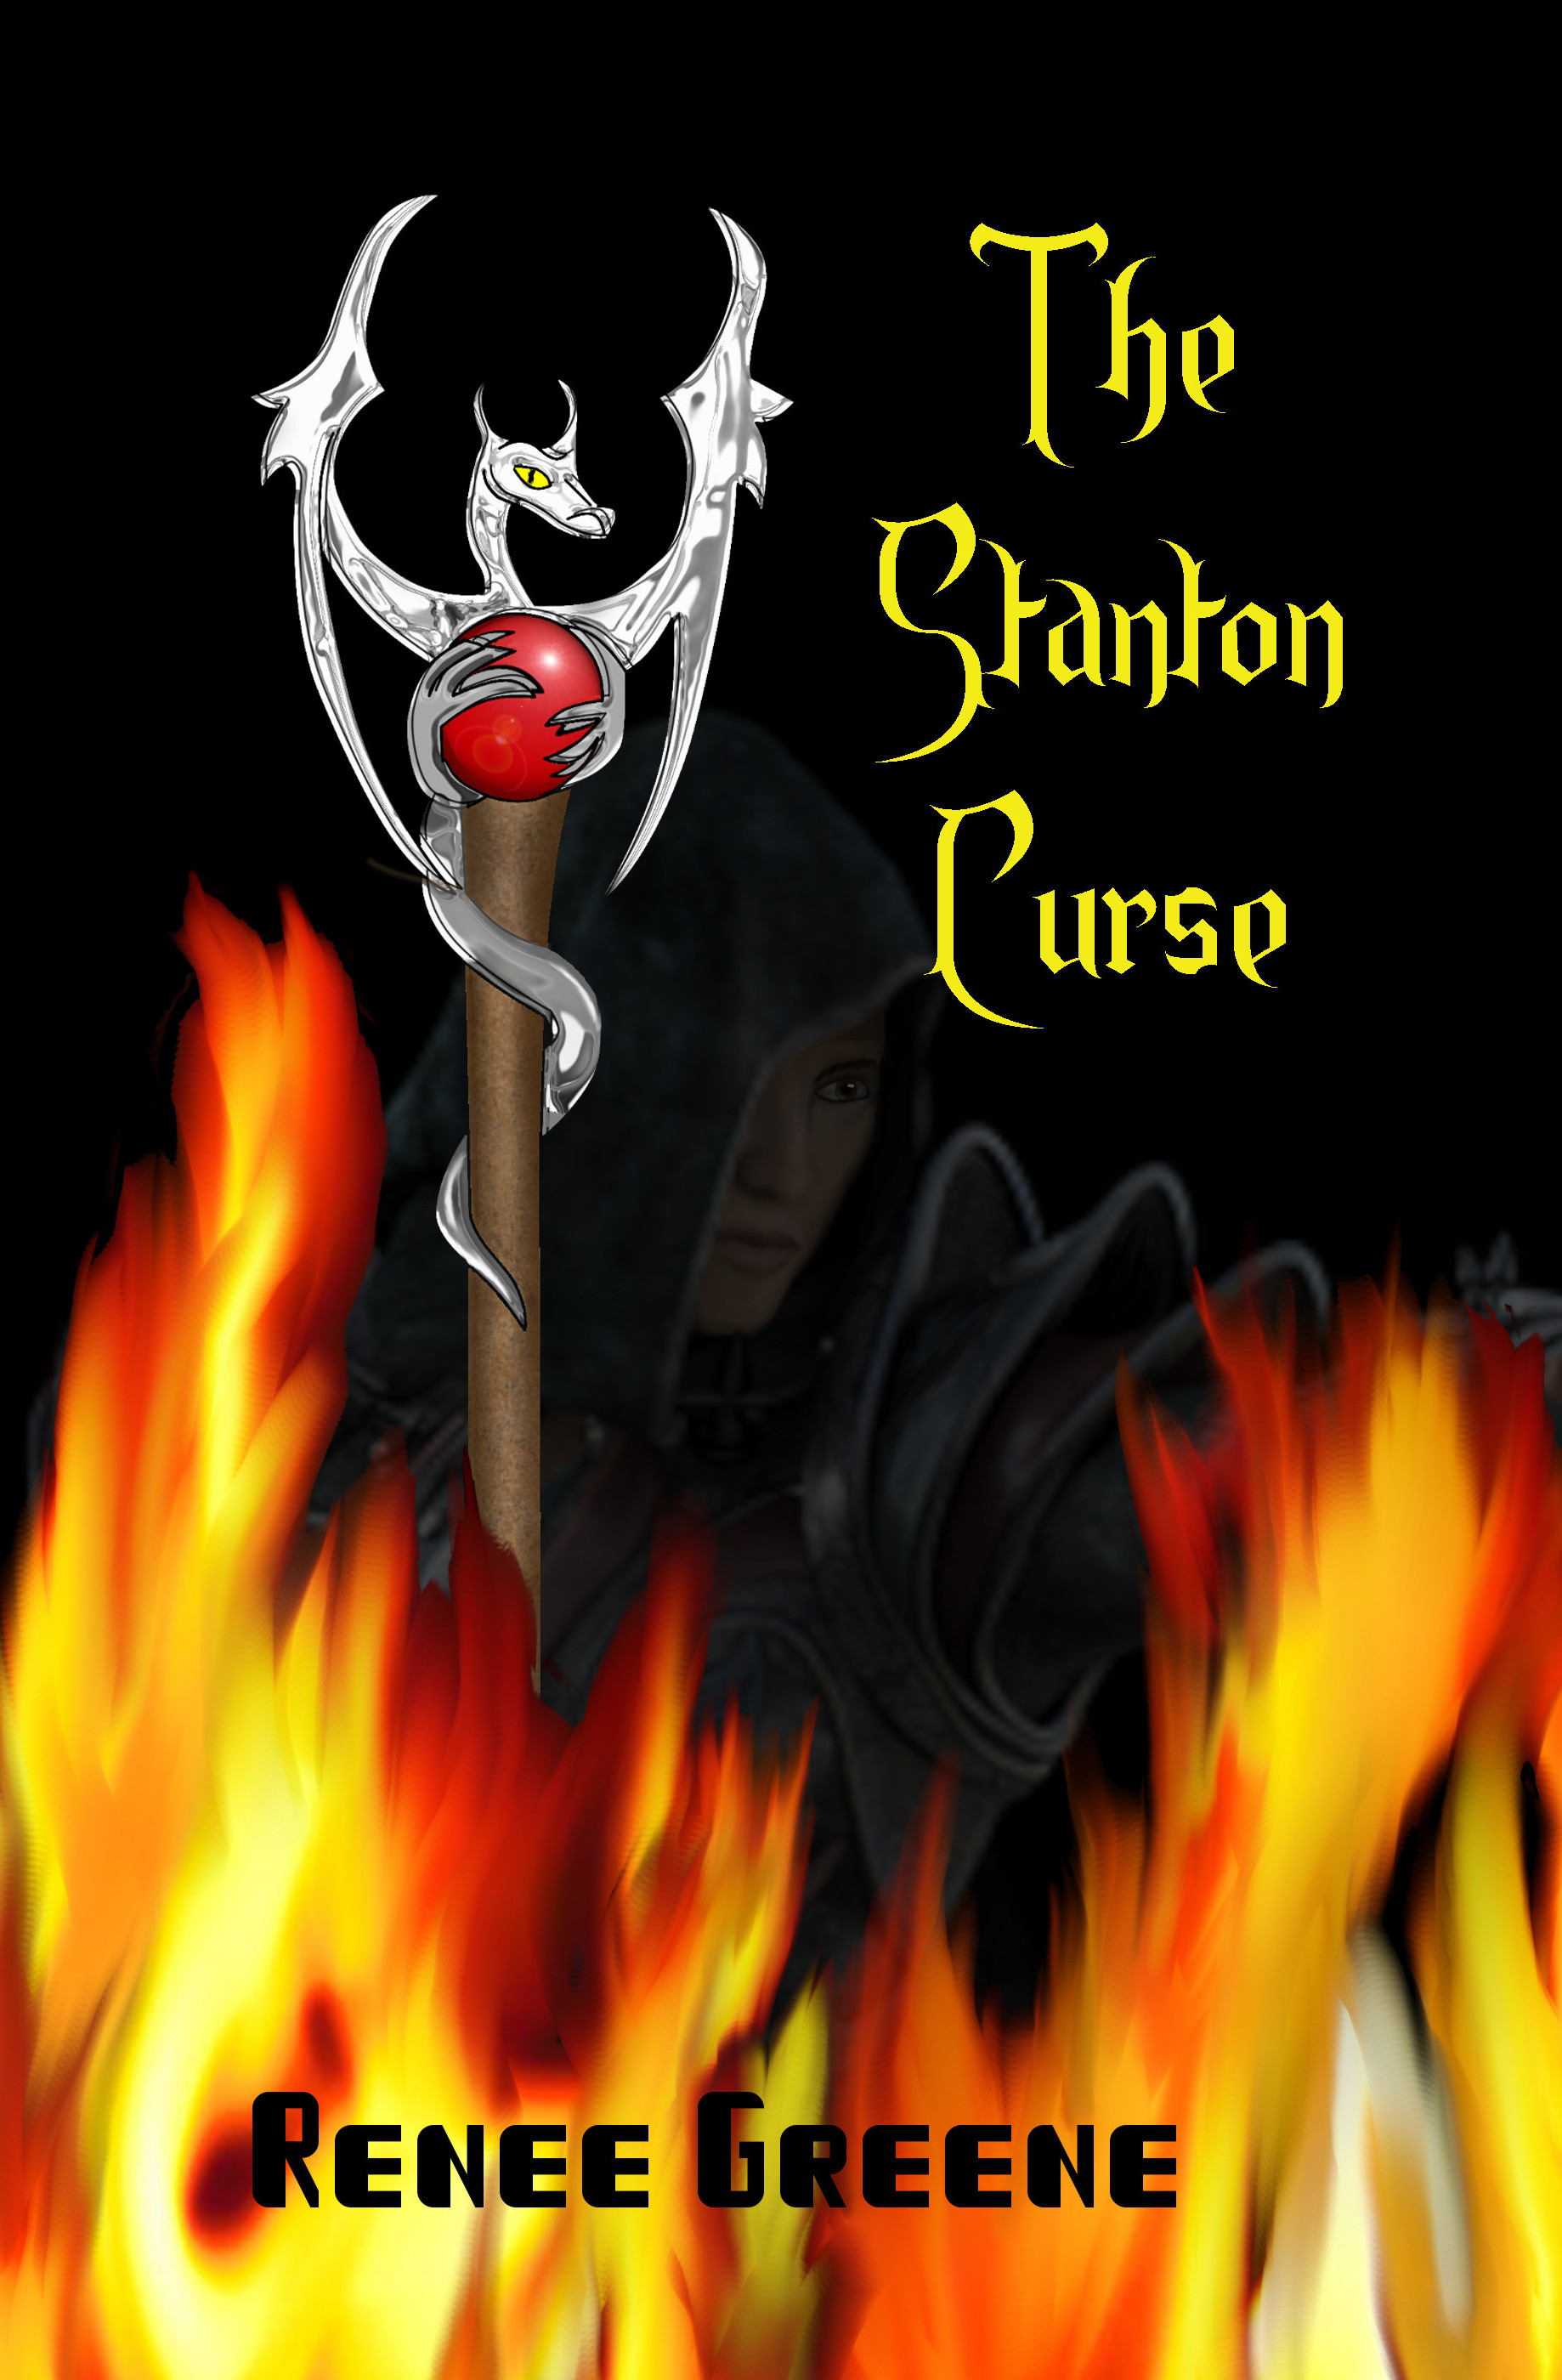 The Stanton Curse